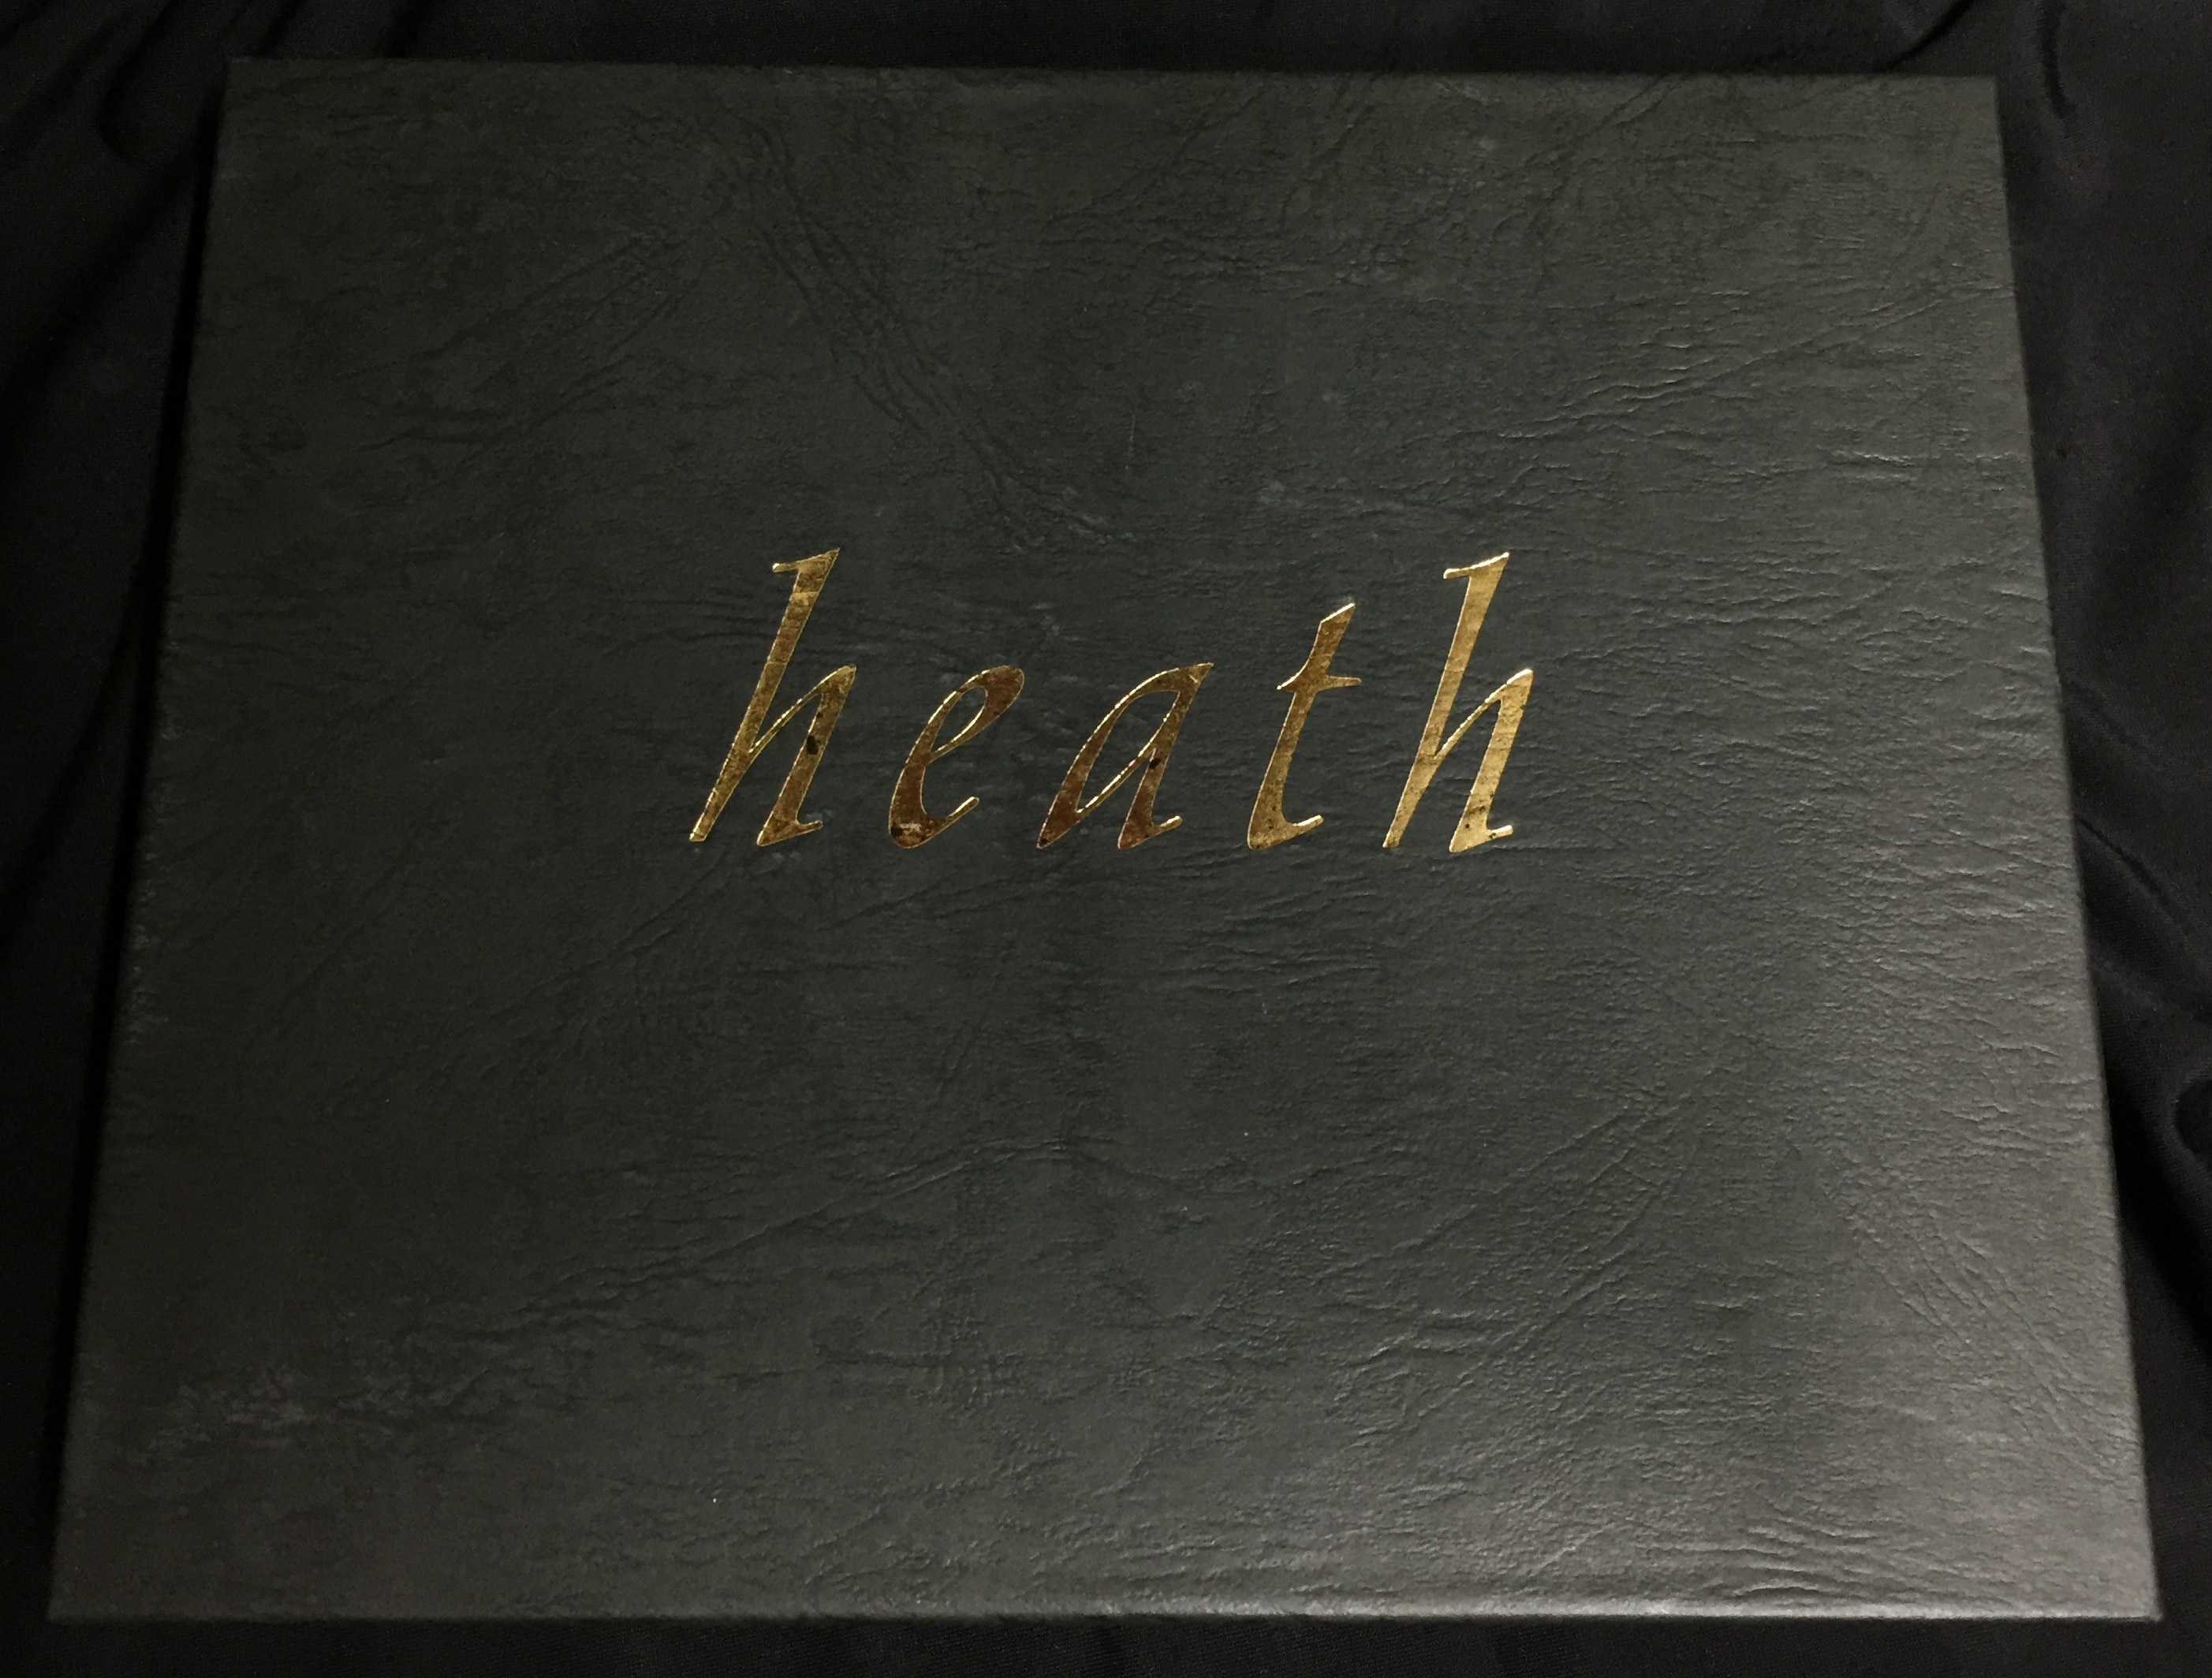 HEATH(X JAPAN) 50000セット限定BOX(VHS+CD) heath | ありある 